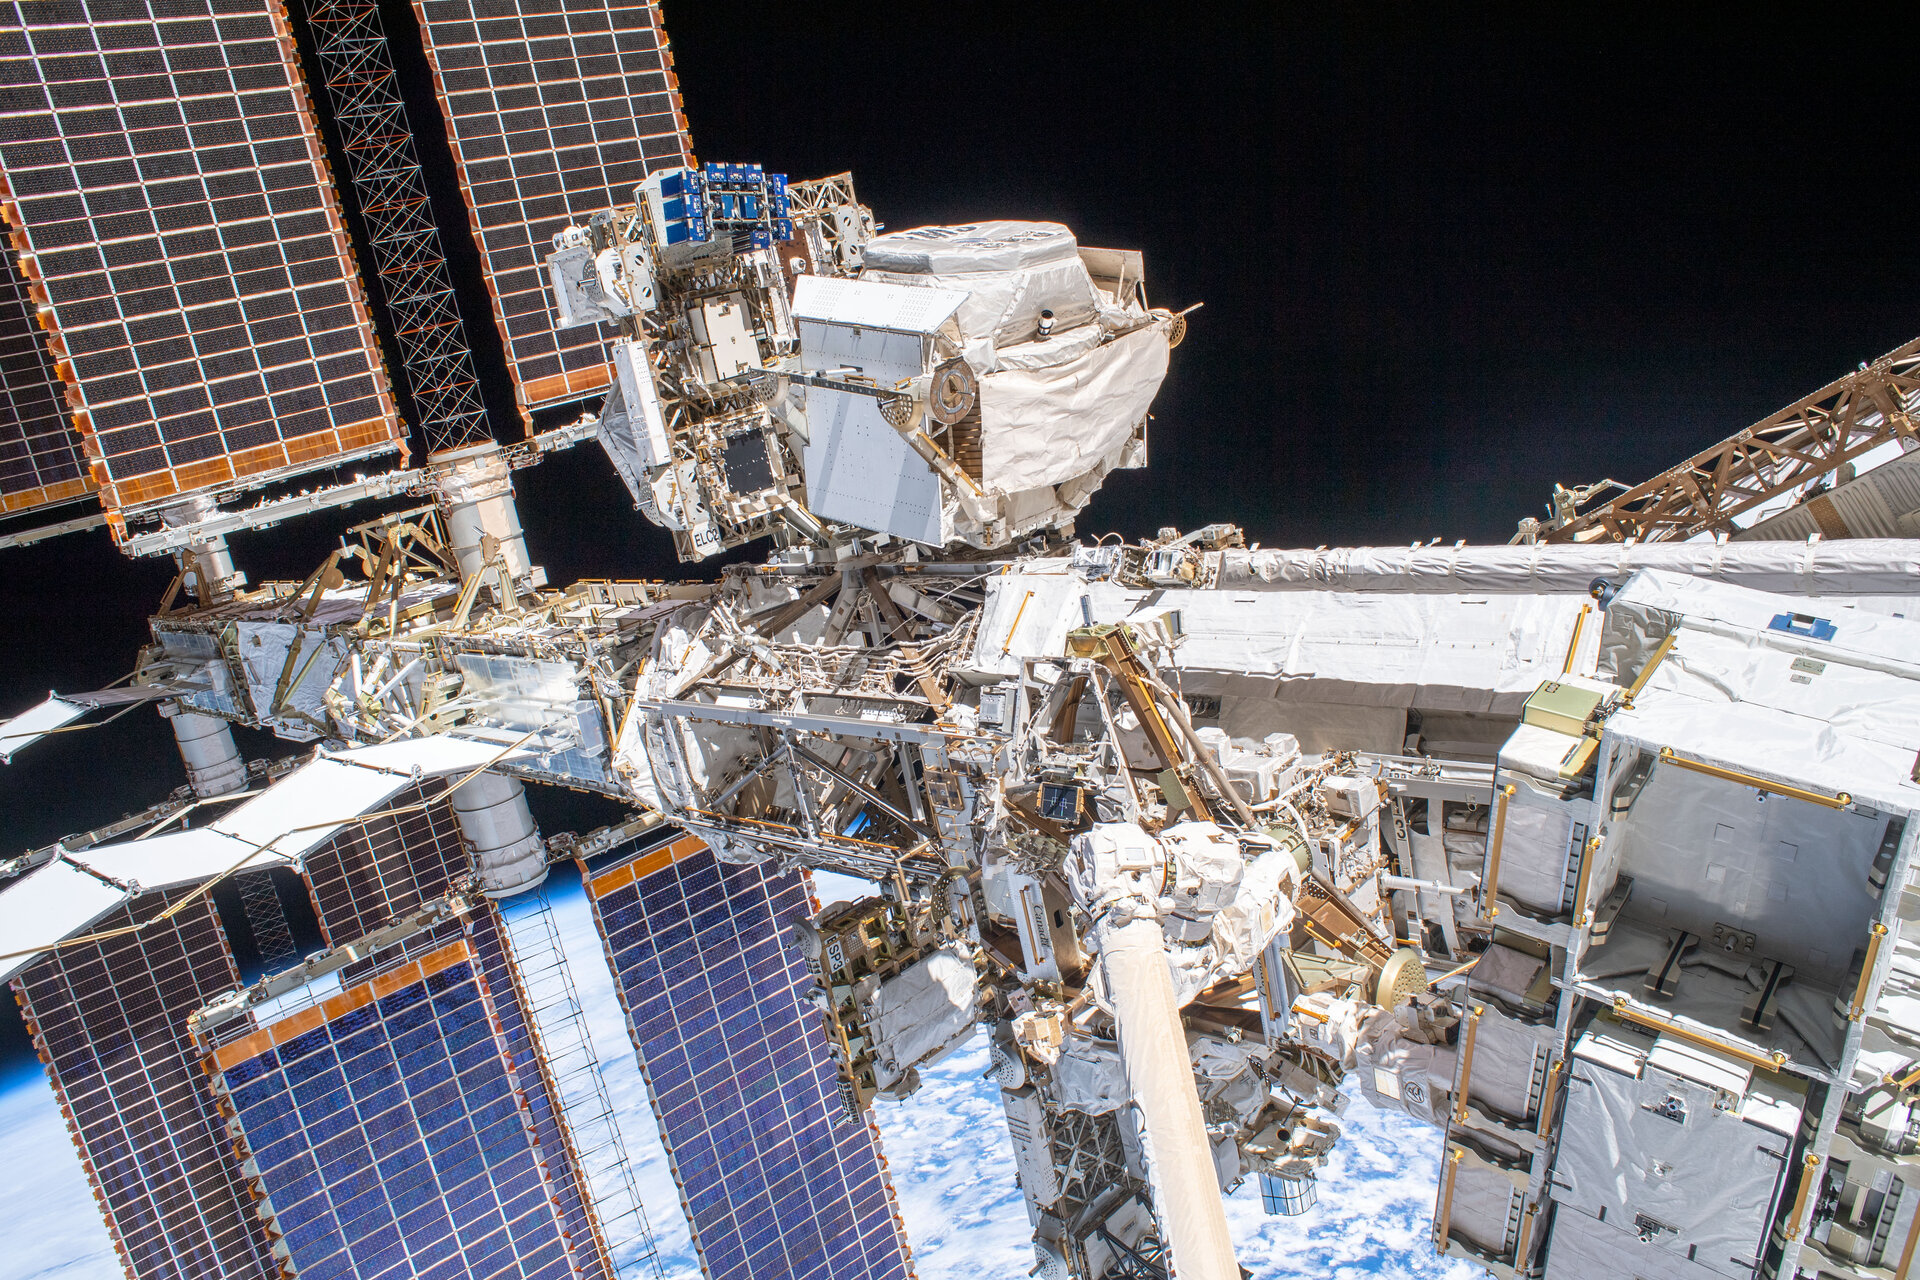 International Space Station seen during spacewalk